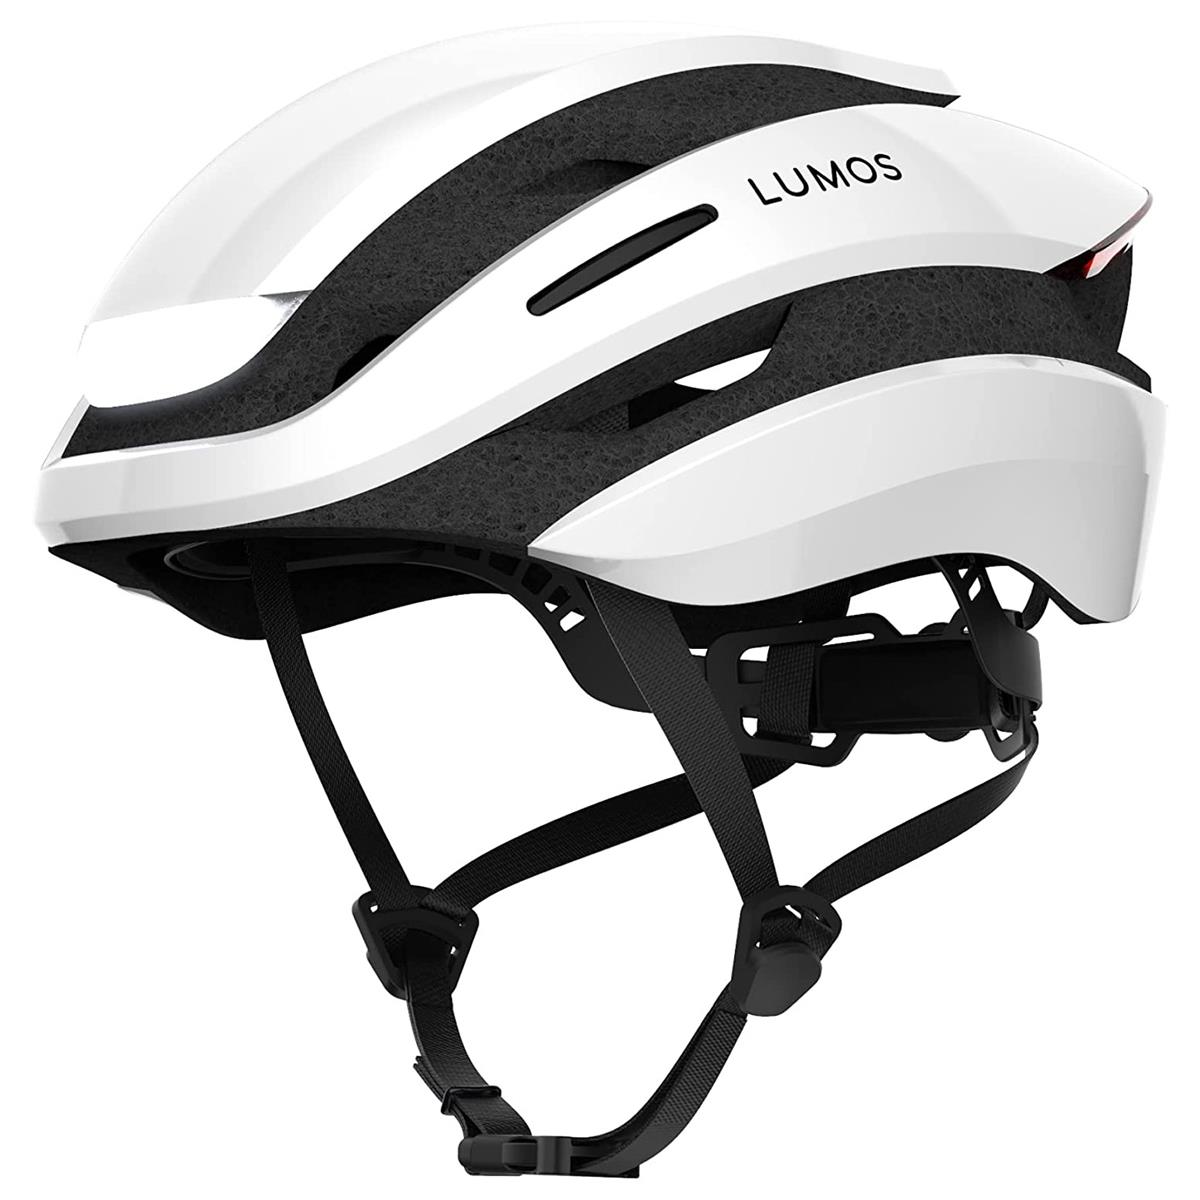 Ultra Helmet White MPIS Size M/L (54-61cm)